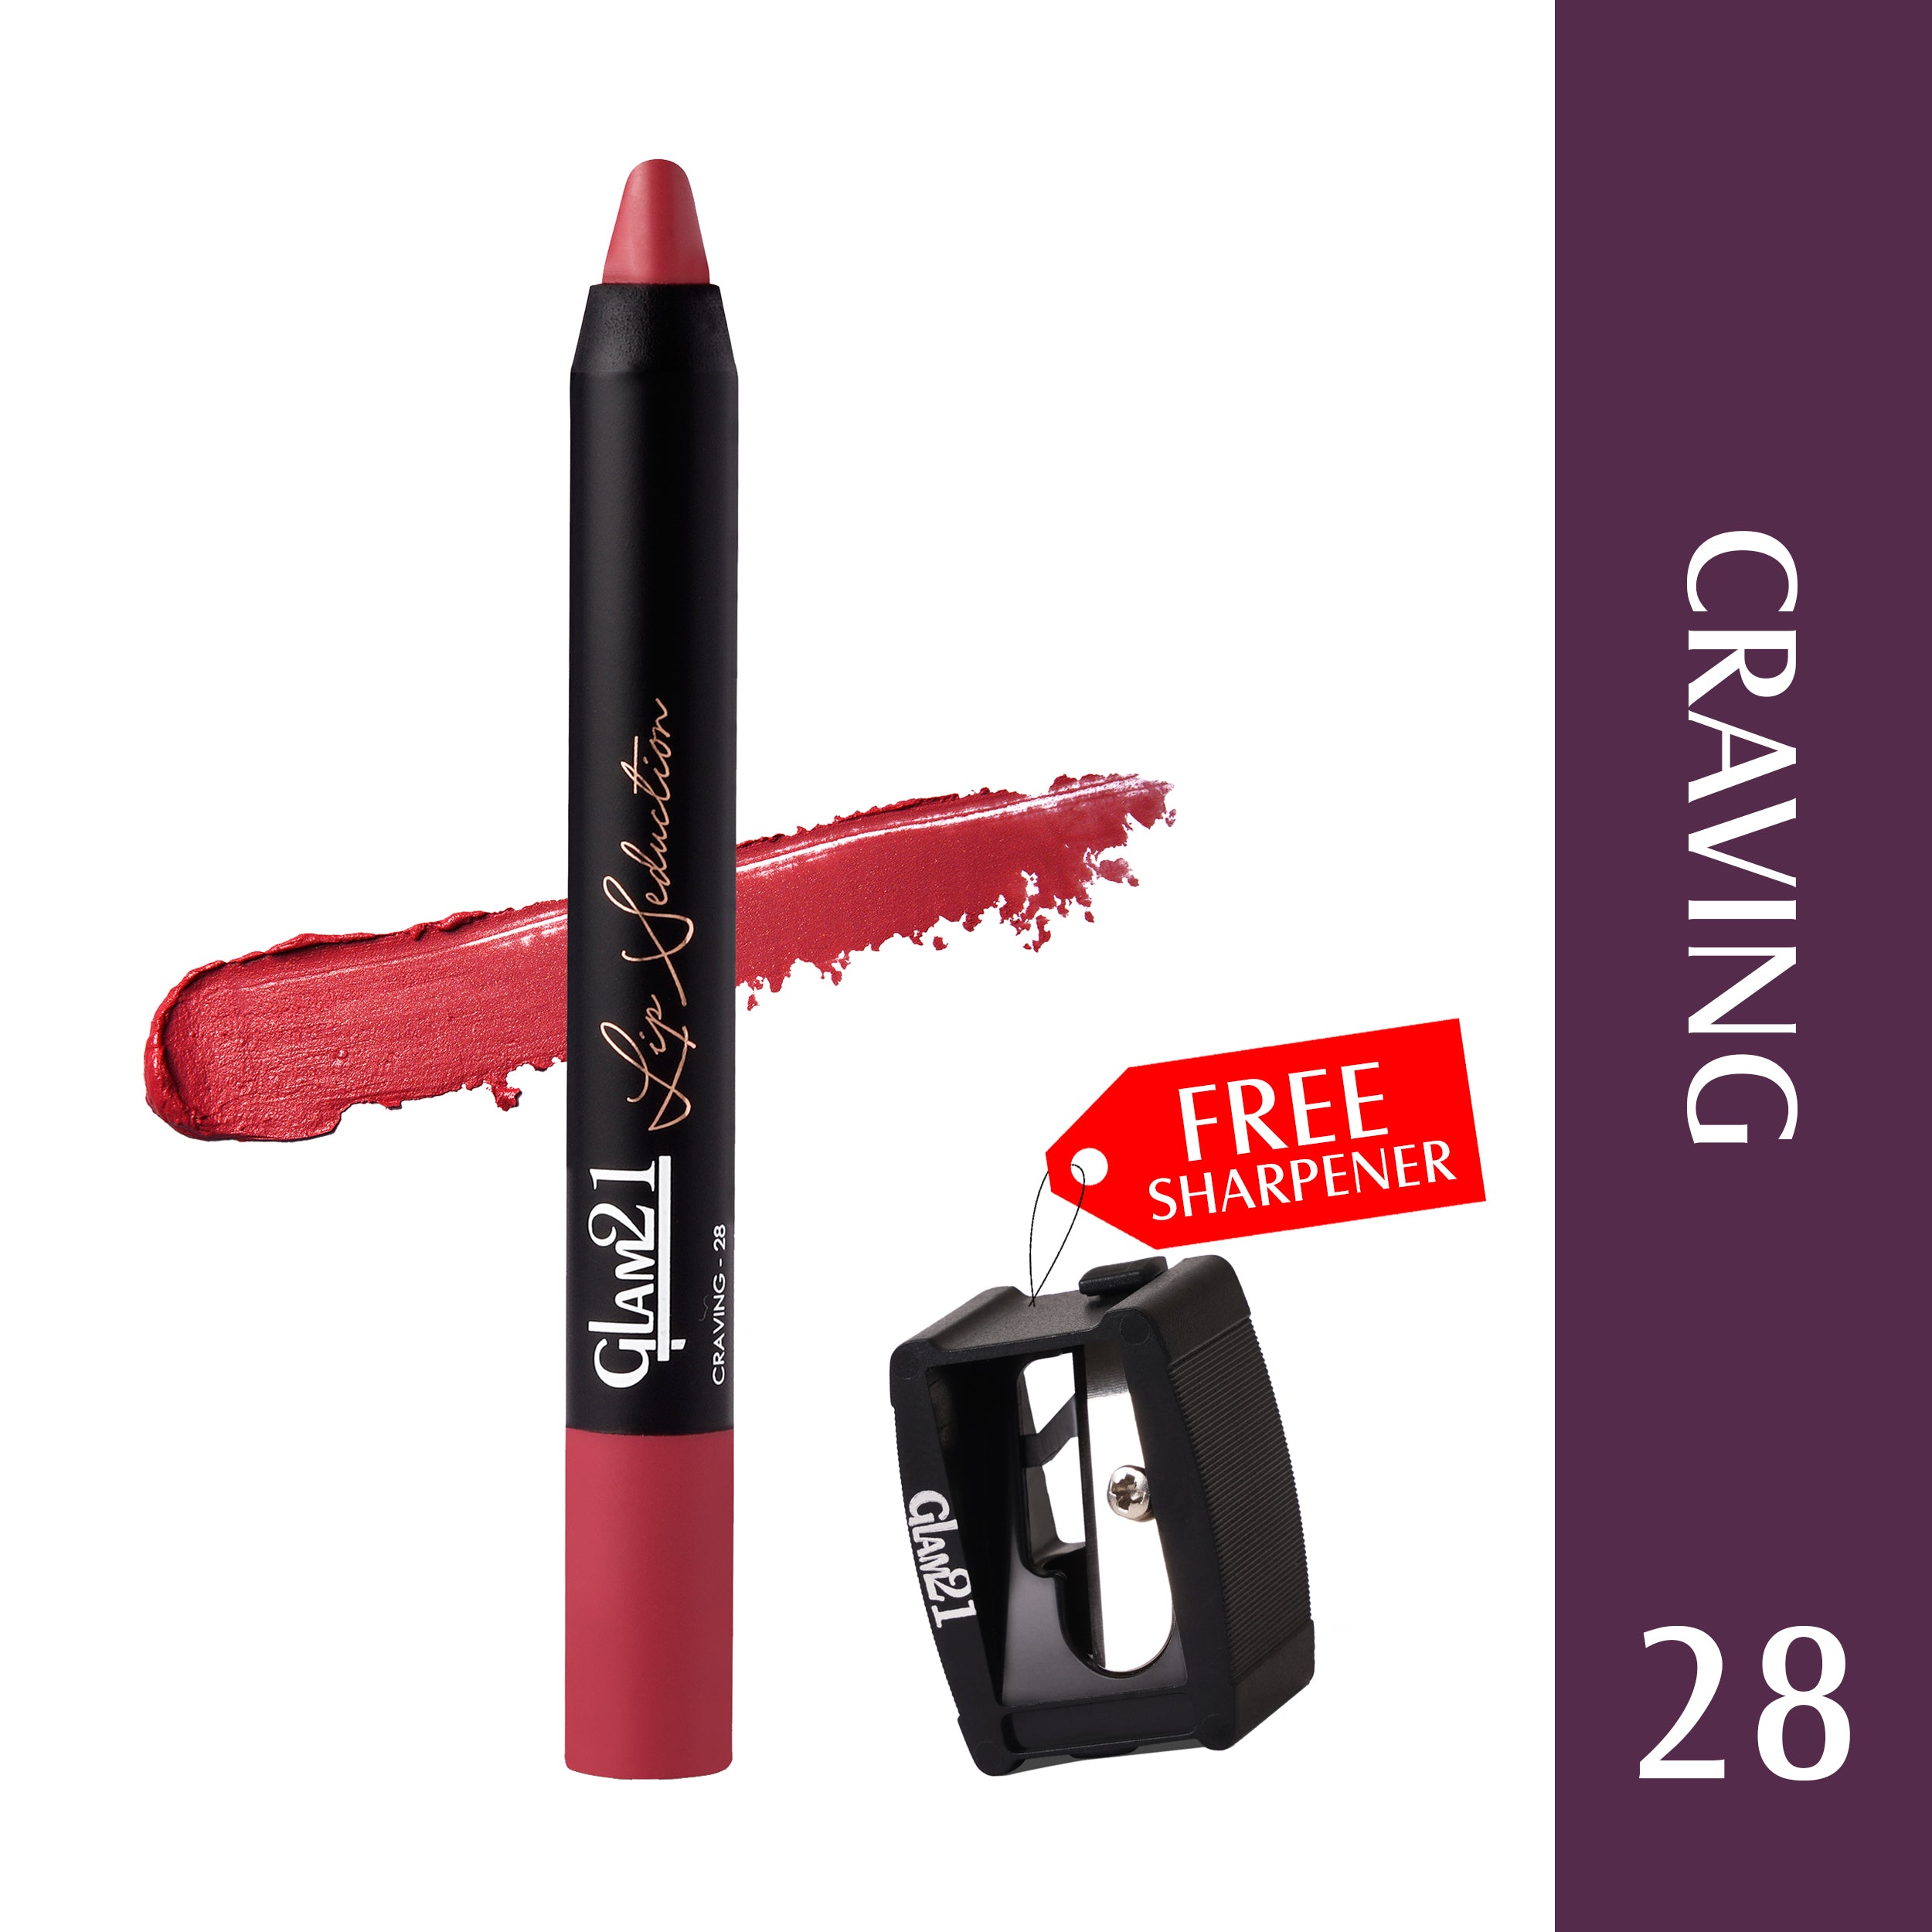 Glam21 Lip Seduction Non-Transfer Crayon Lipstick | Longlasting Creamy Matte Formula (Carving-28, 2.8 g)